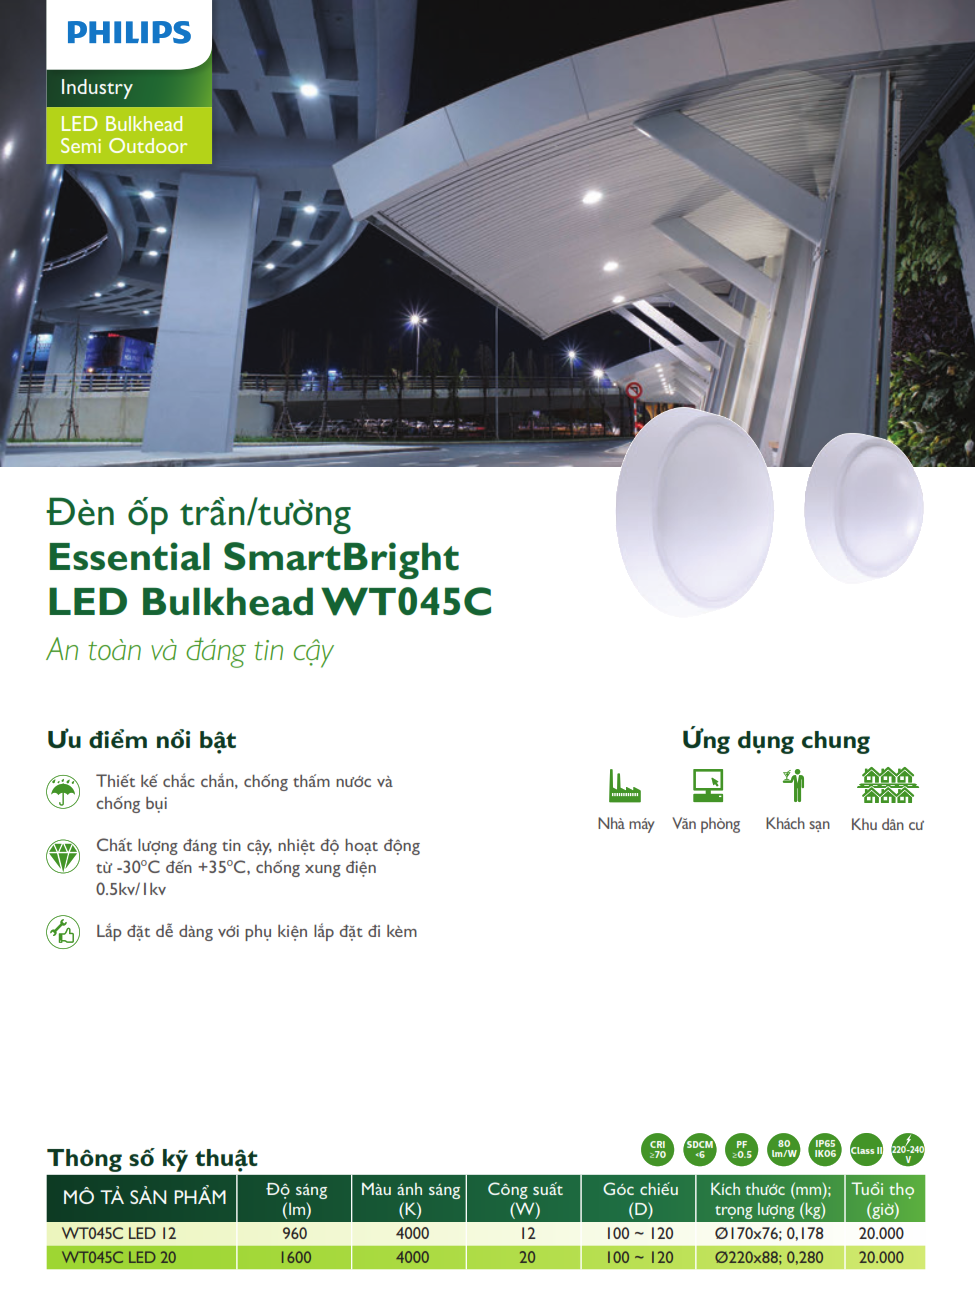 Đèn LED gắn nổi Philips WT045C